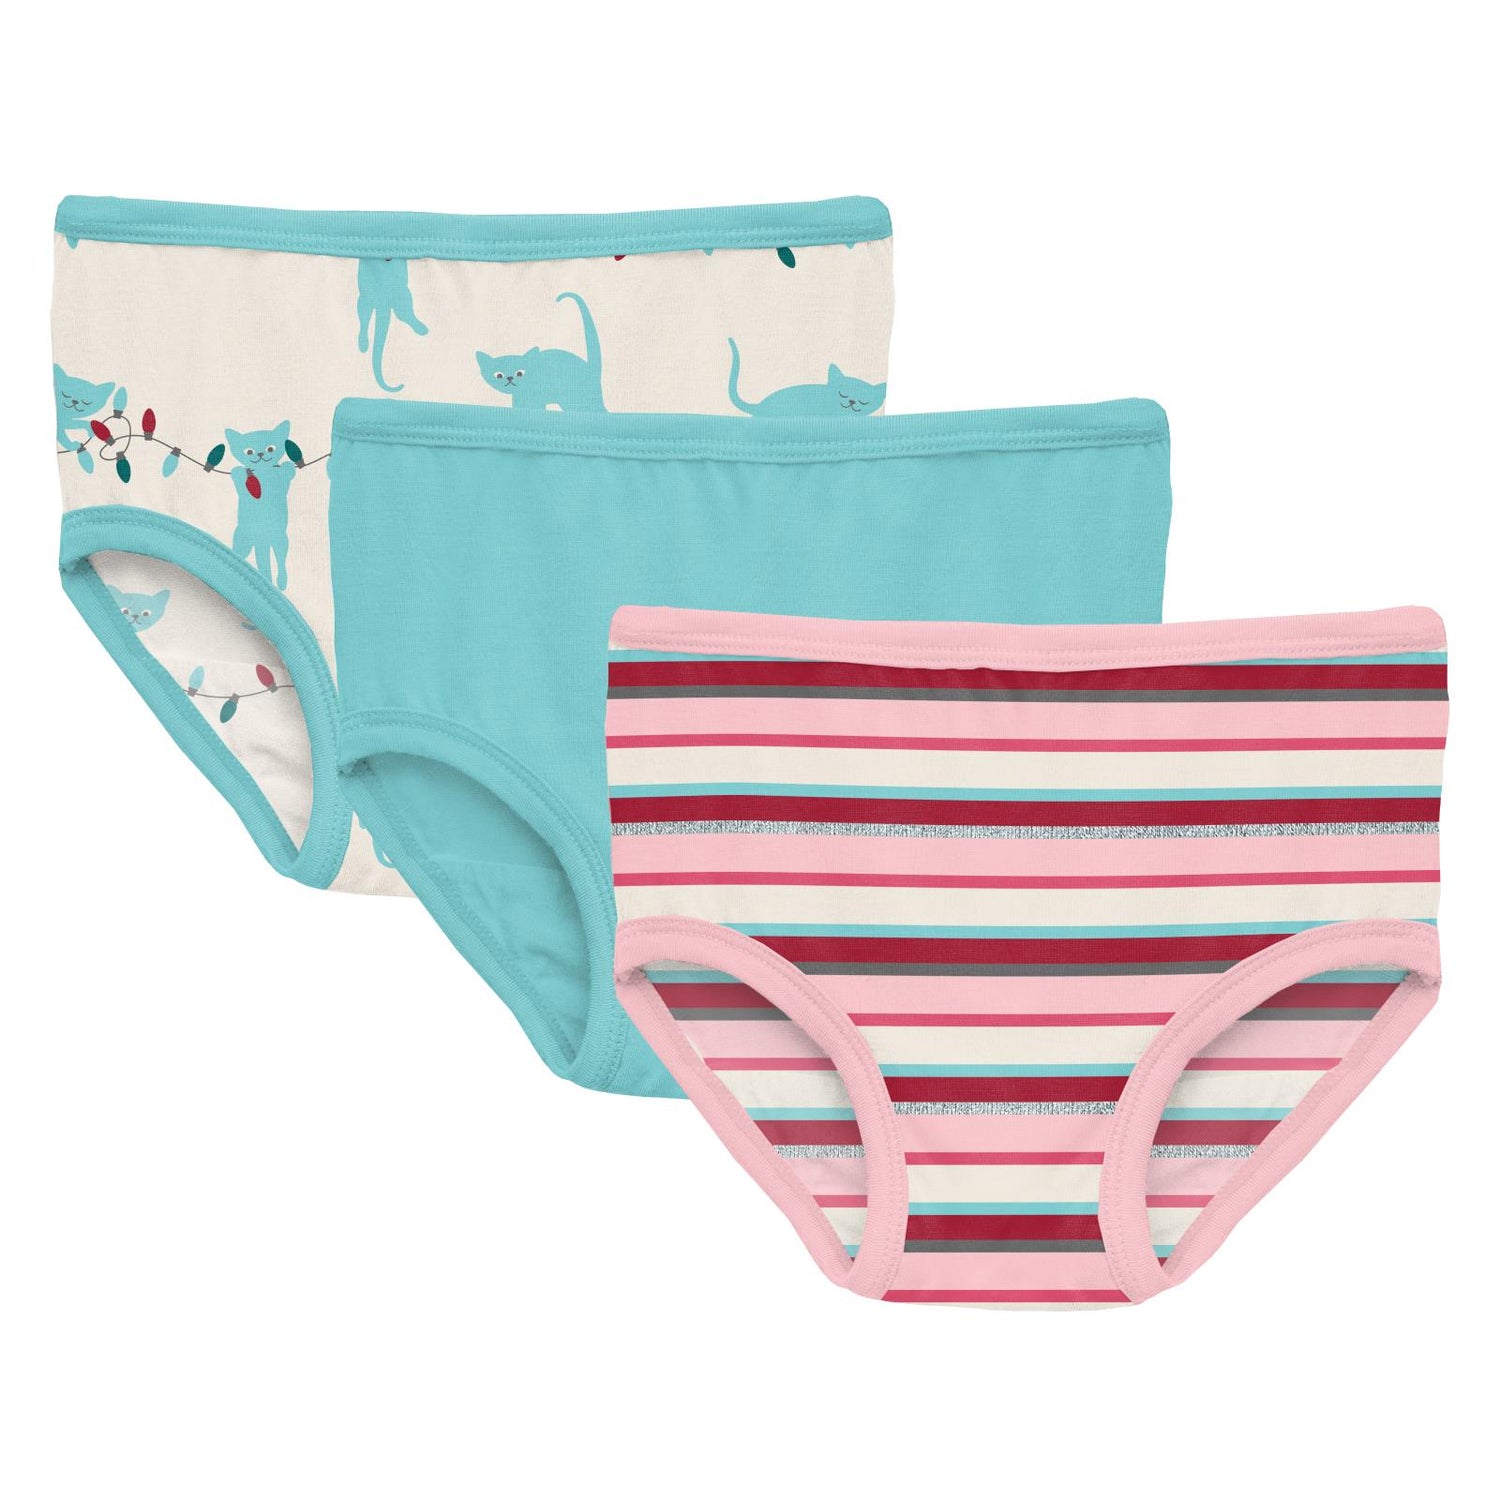 Print Girl's Underwear Set of 3 in Natural Tangled Kittens, Iceberg and Anniversary Bobsled Stripe